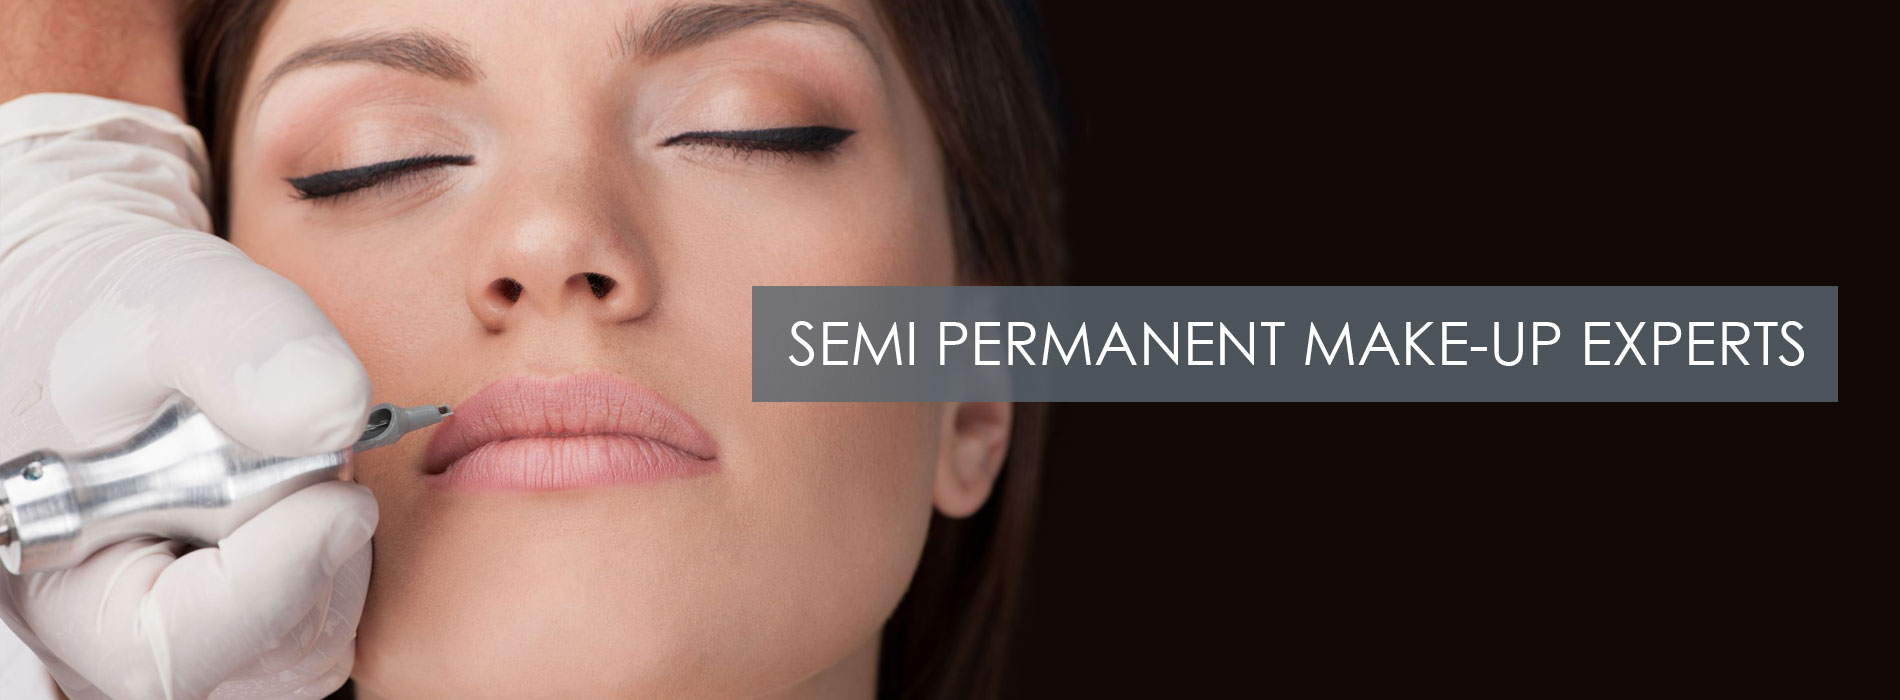 semi-permanent-make-up